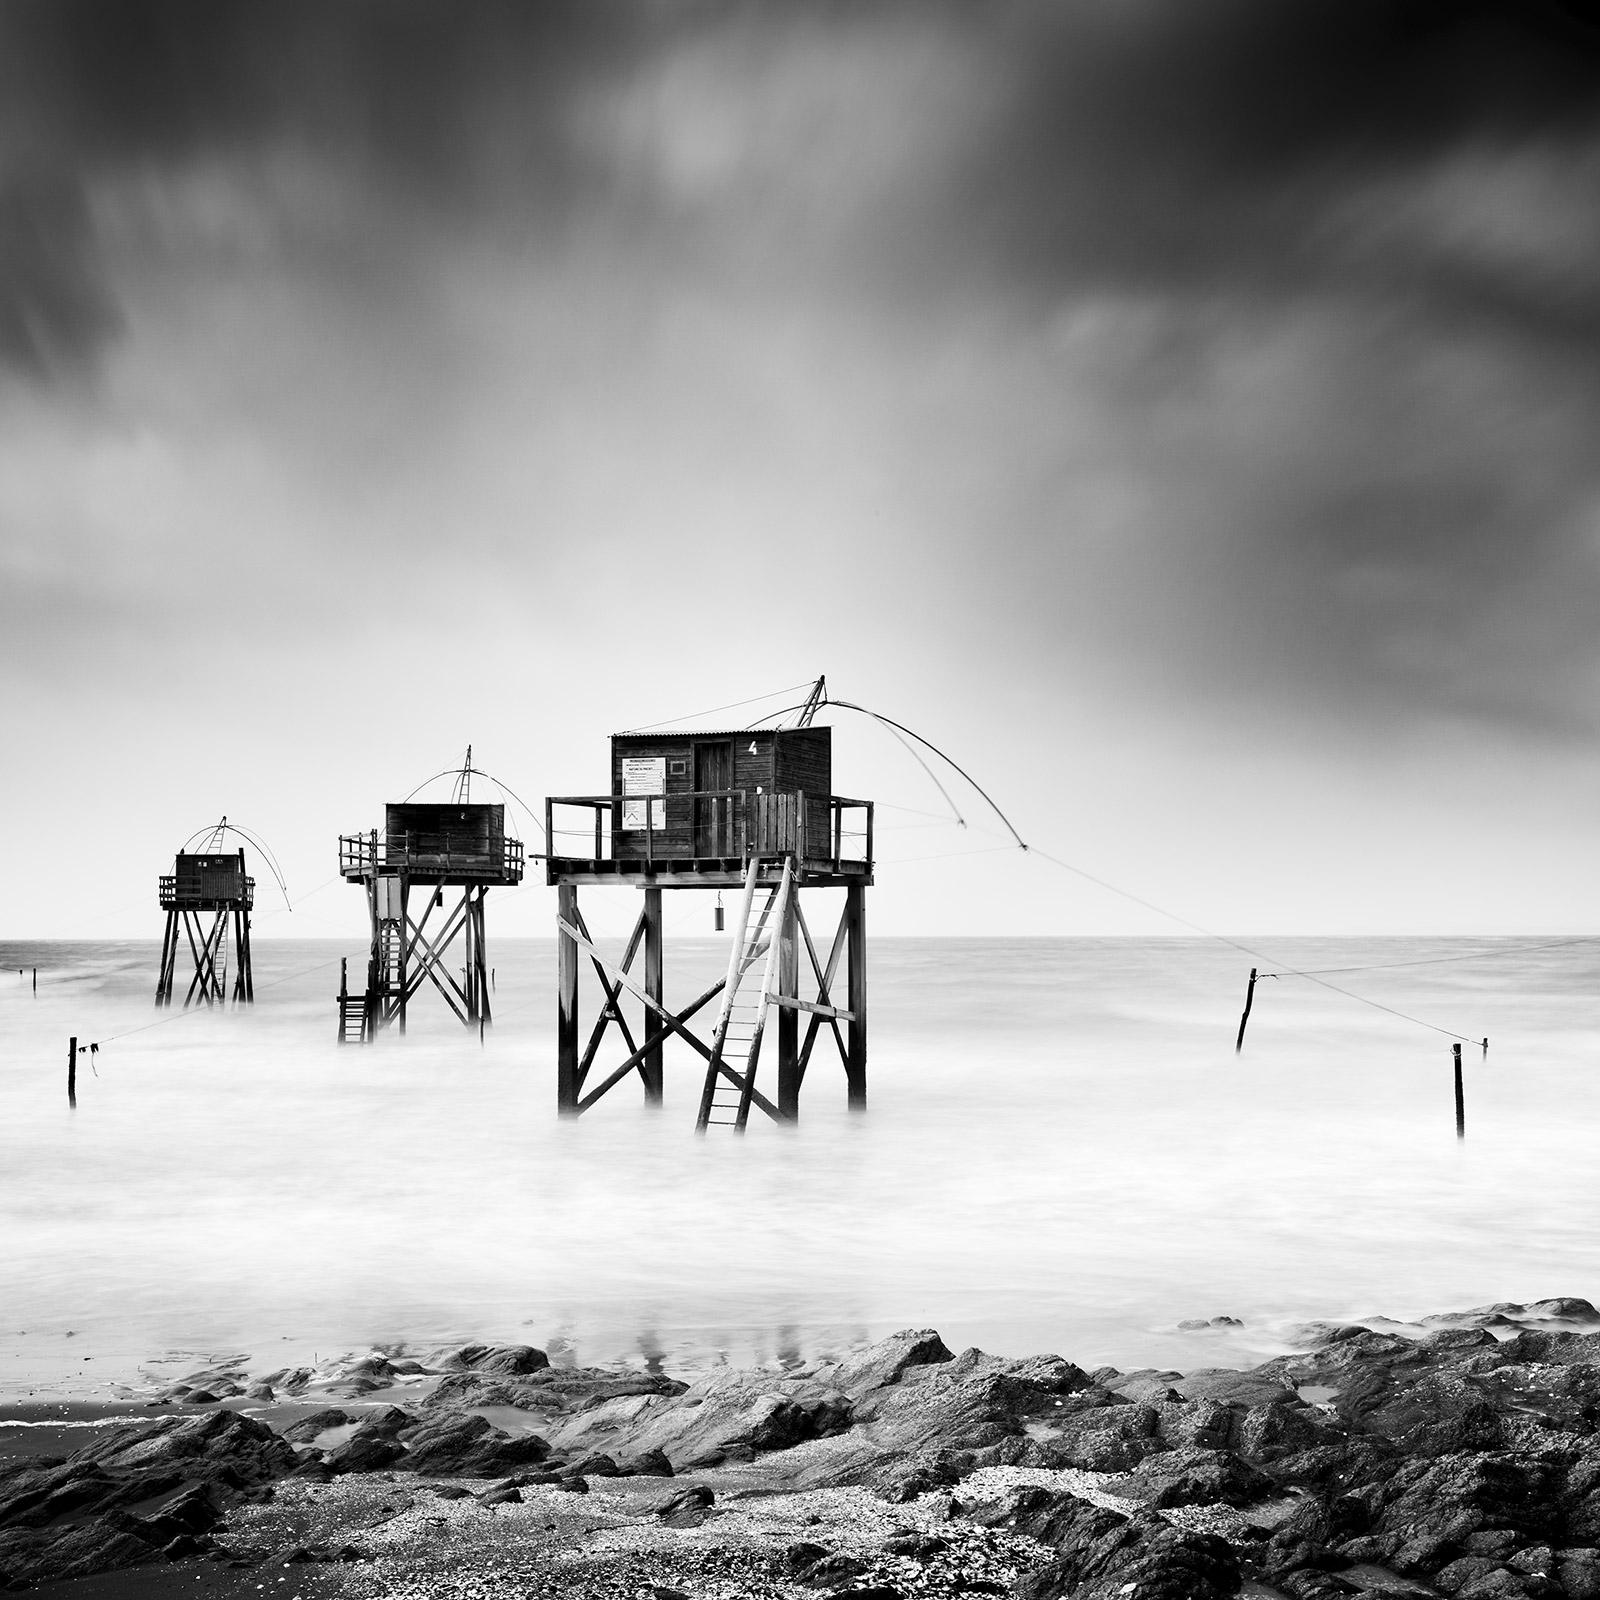 Fishing Hut on Stilts, Carrelets, black and white fine landscape photography 